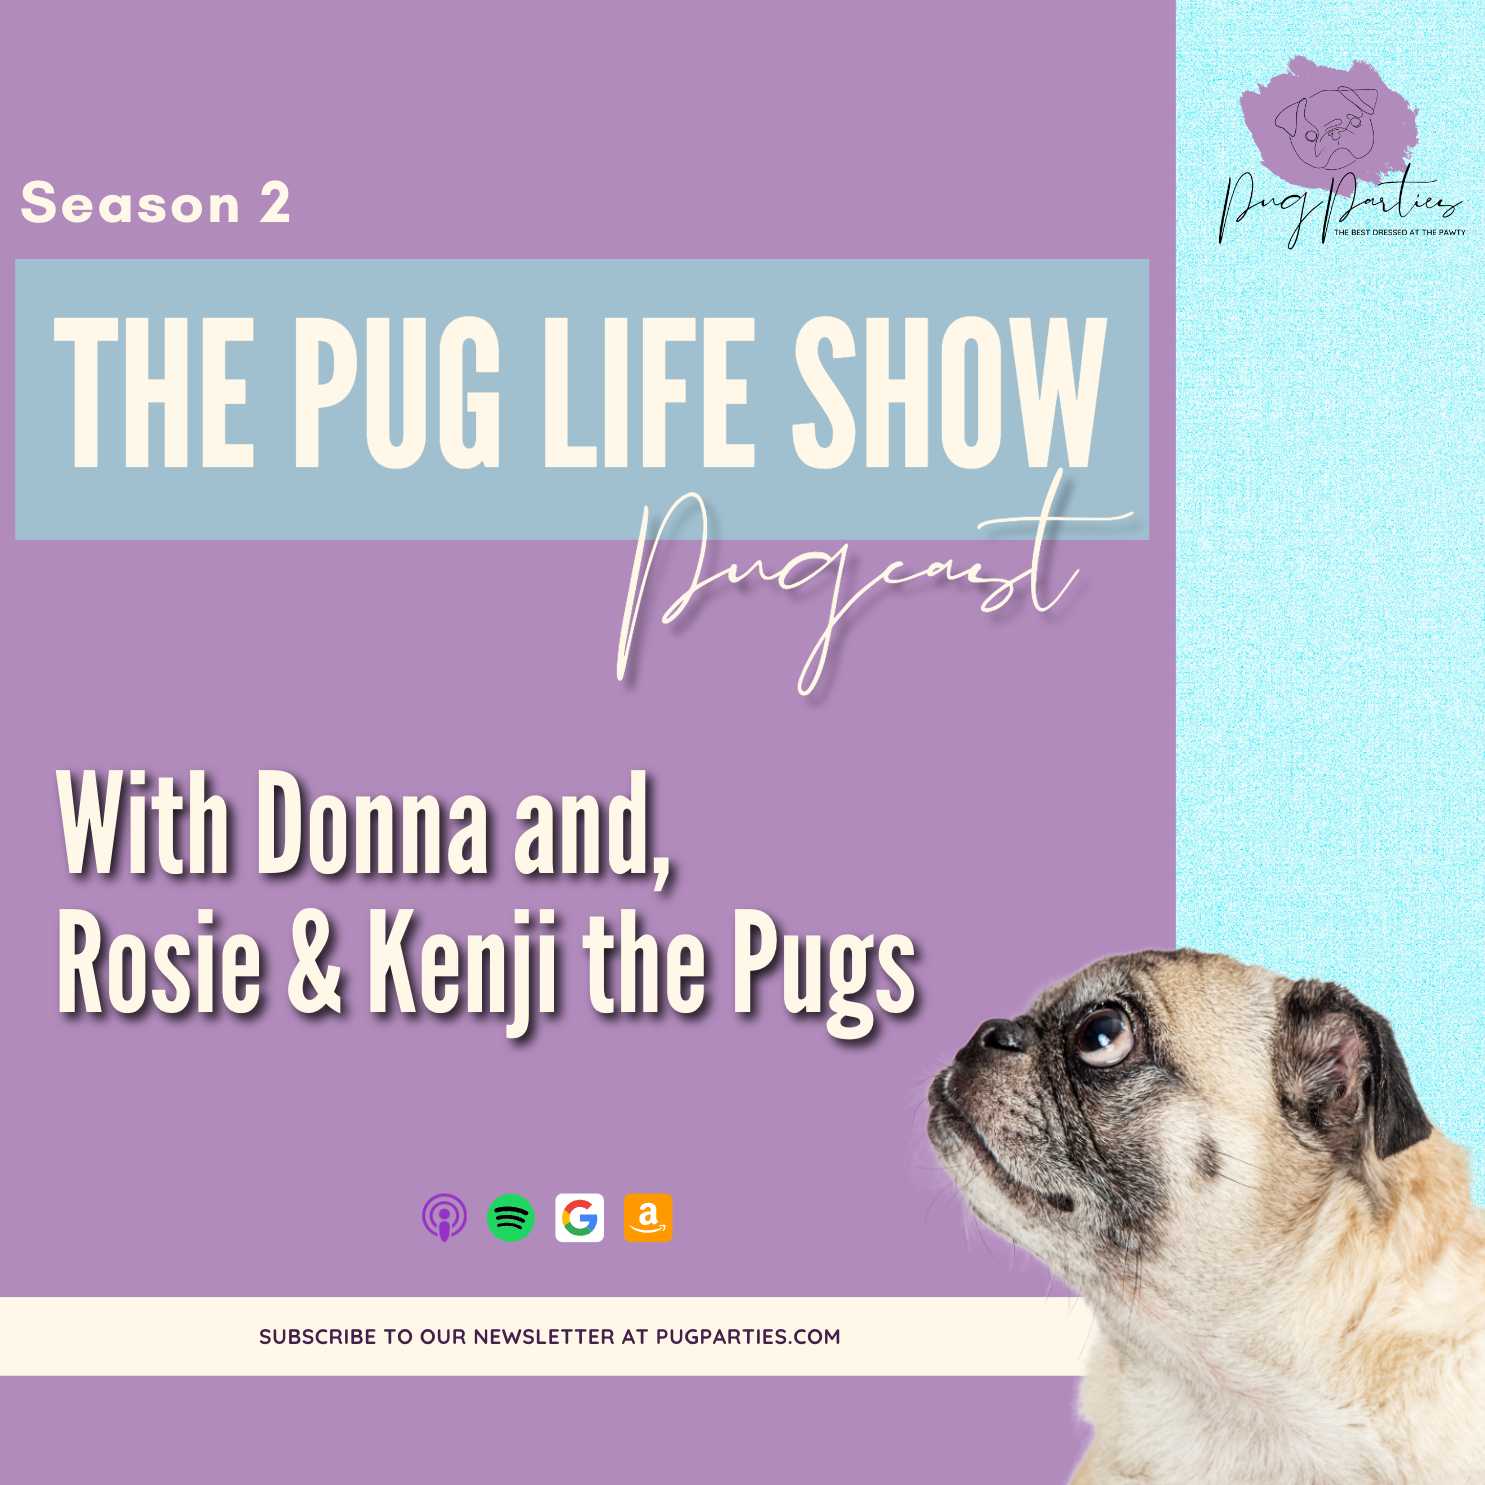 The Pug Life Show